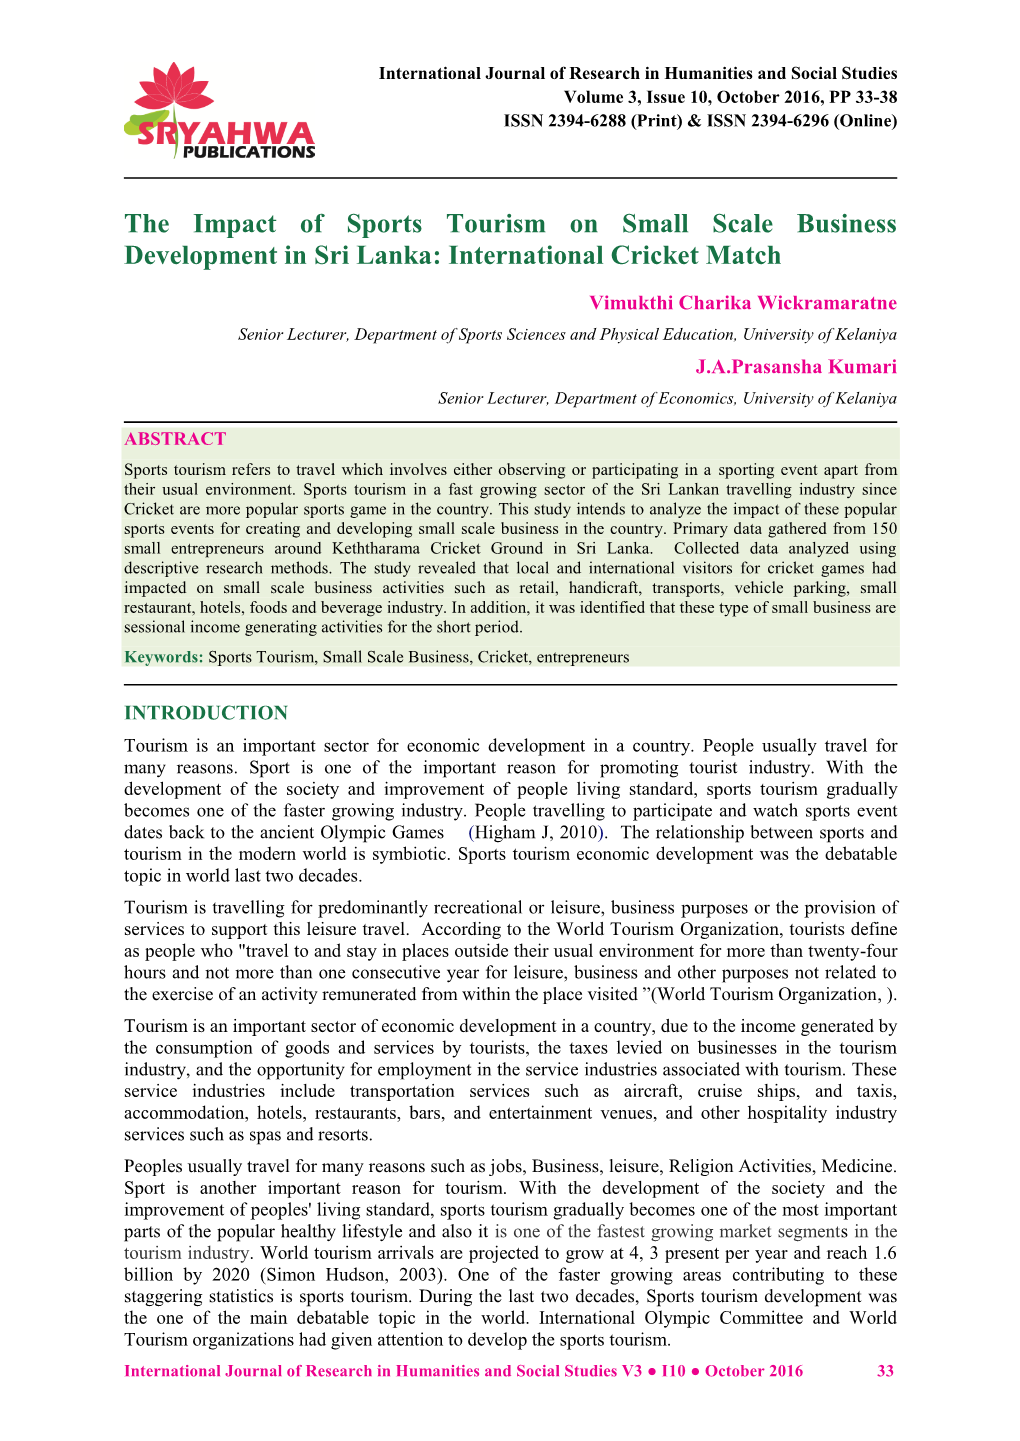 The Impact of Sports Tourism on Small Scale Business Development in Sri Lanka: International Cricket Match